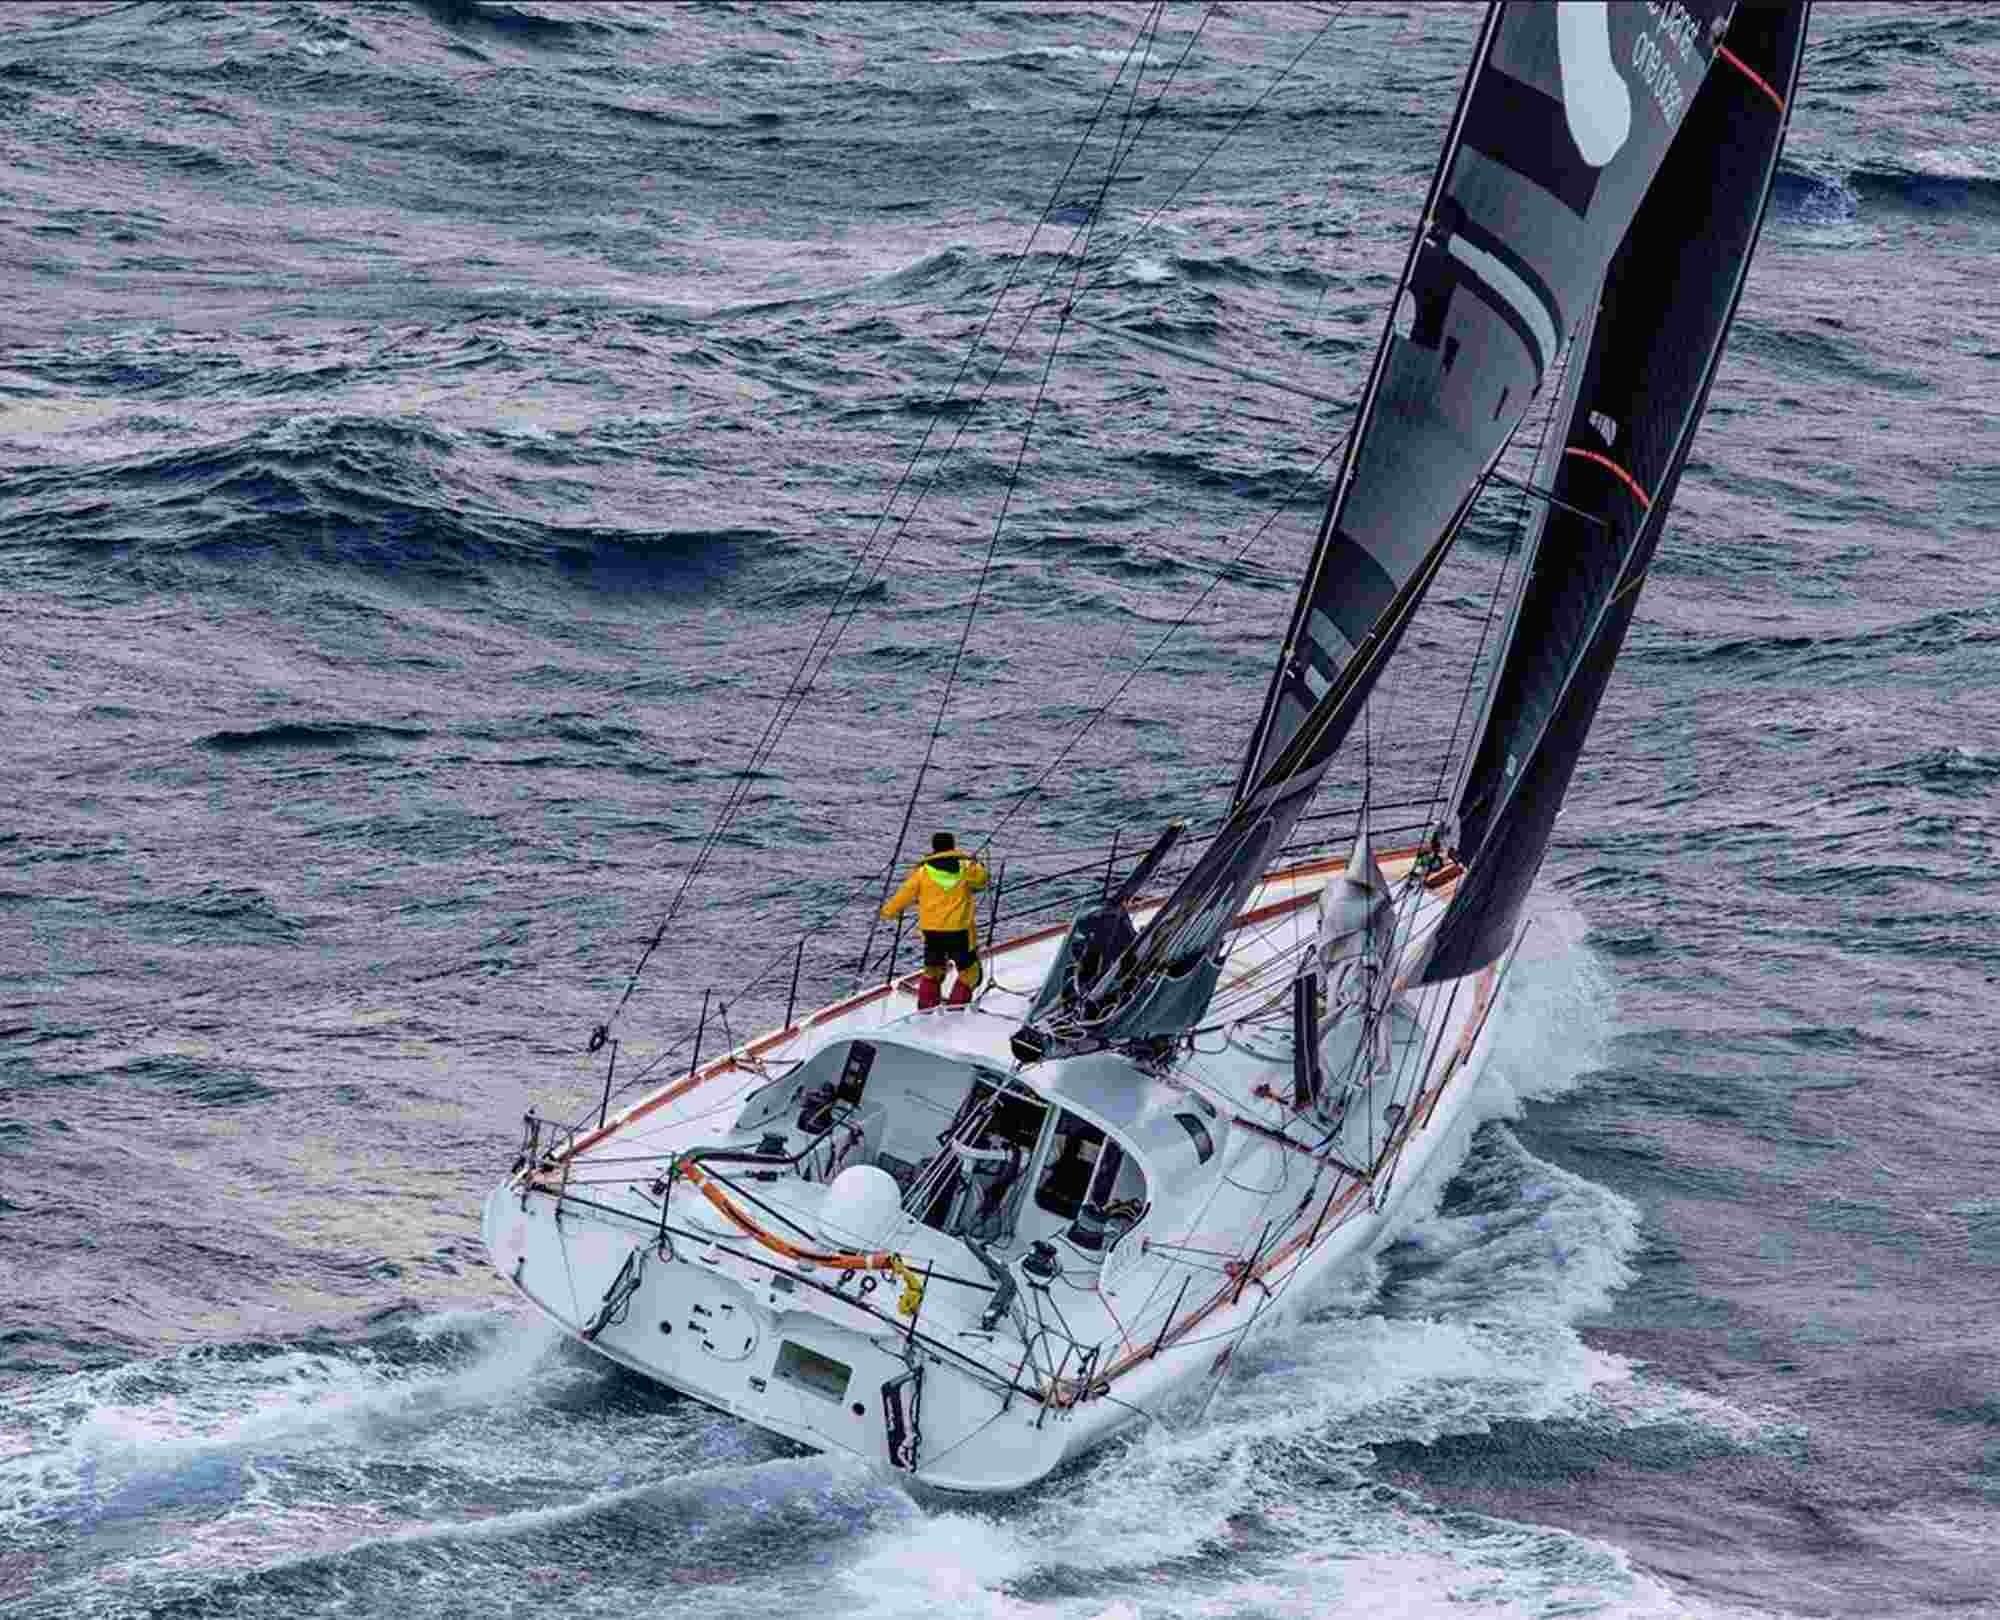 2000 Offshore Racing ONE PLANET ONE OCEAN